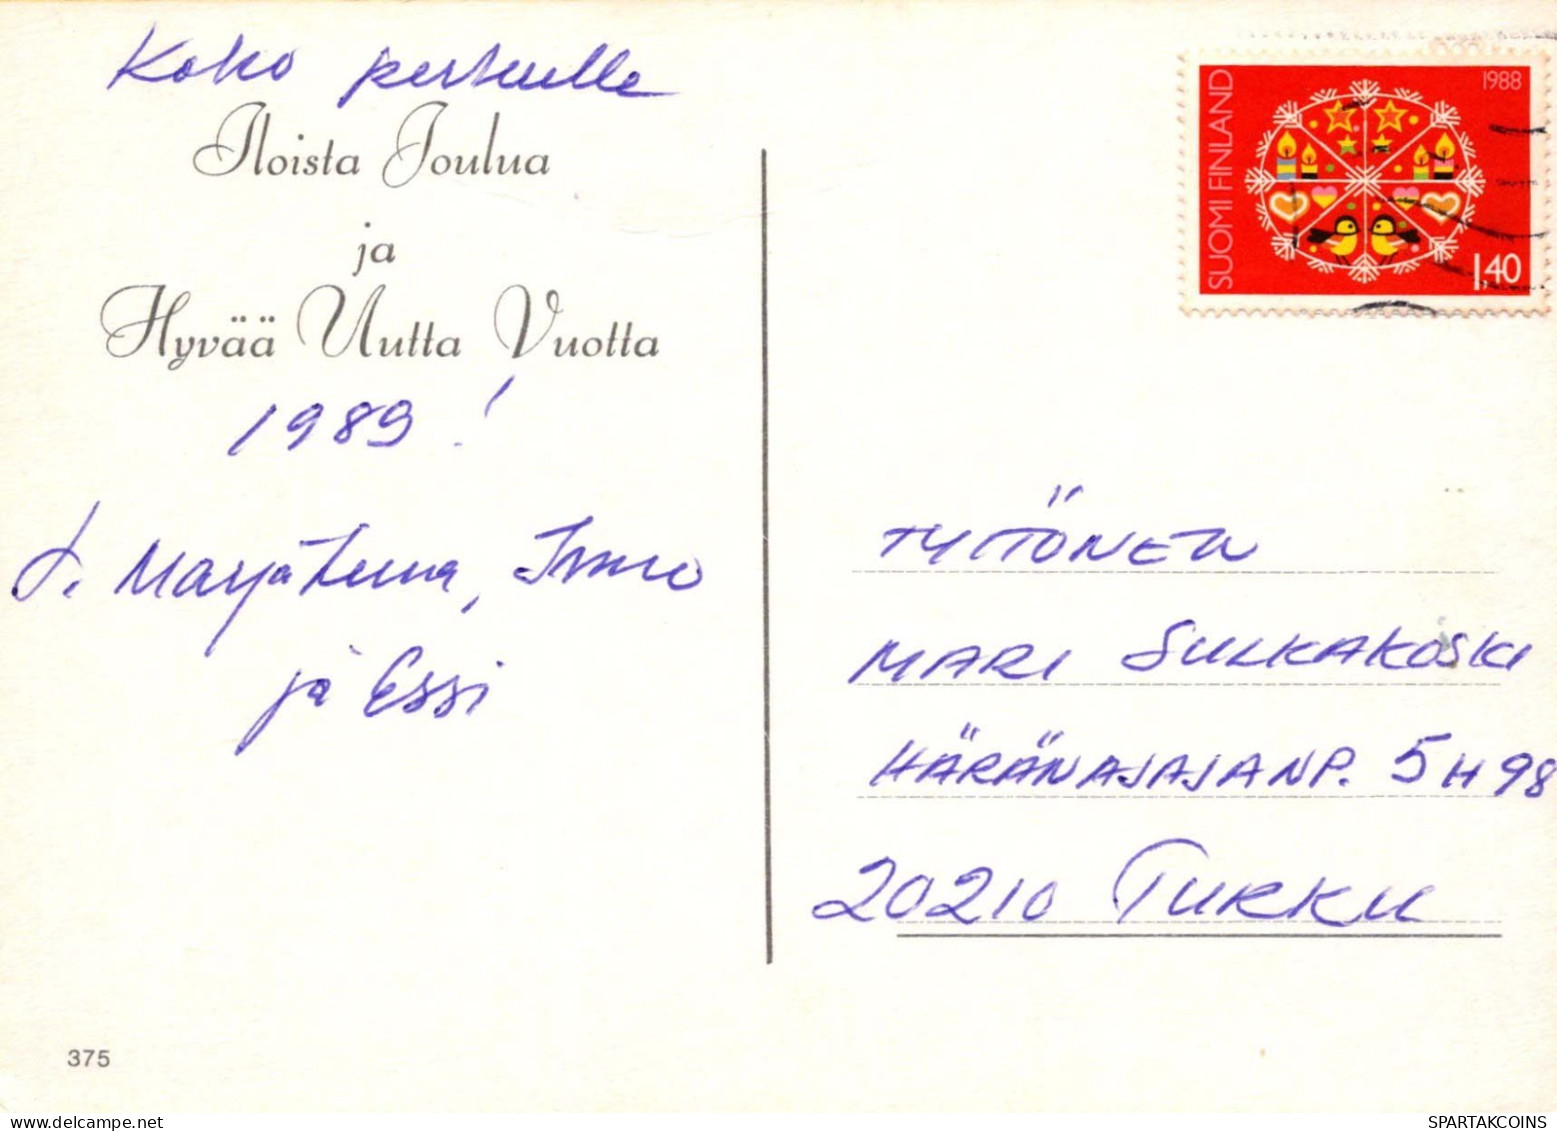 Buon Anno Natale BAMBINO Vintage Cartolina CPSM #PAS891.IT - New Year